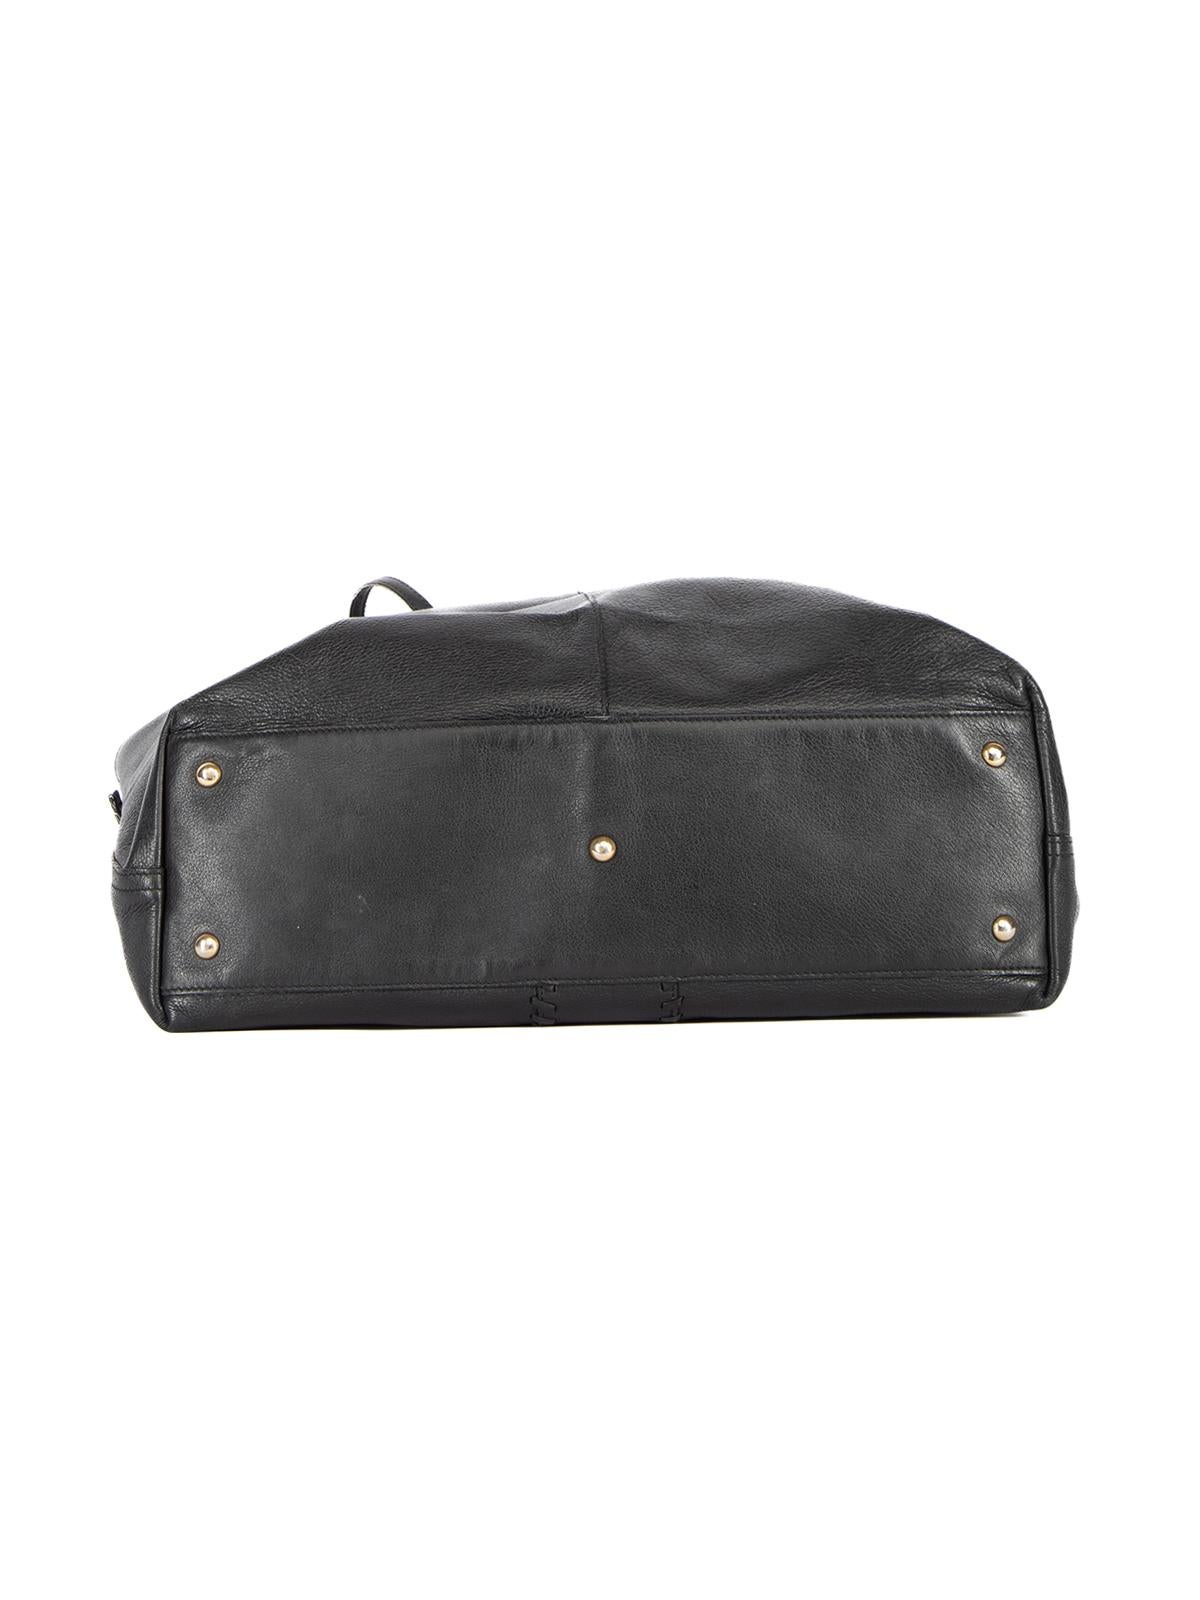 Pre-Loved Yves Saint Laurent Women's Leather Y Logo Tote Bag 1